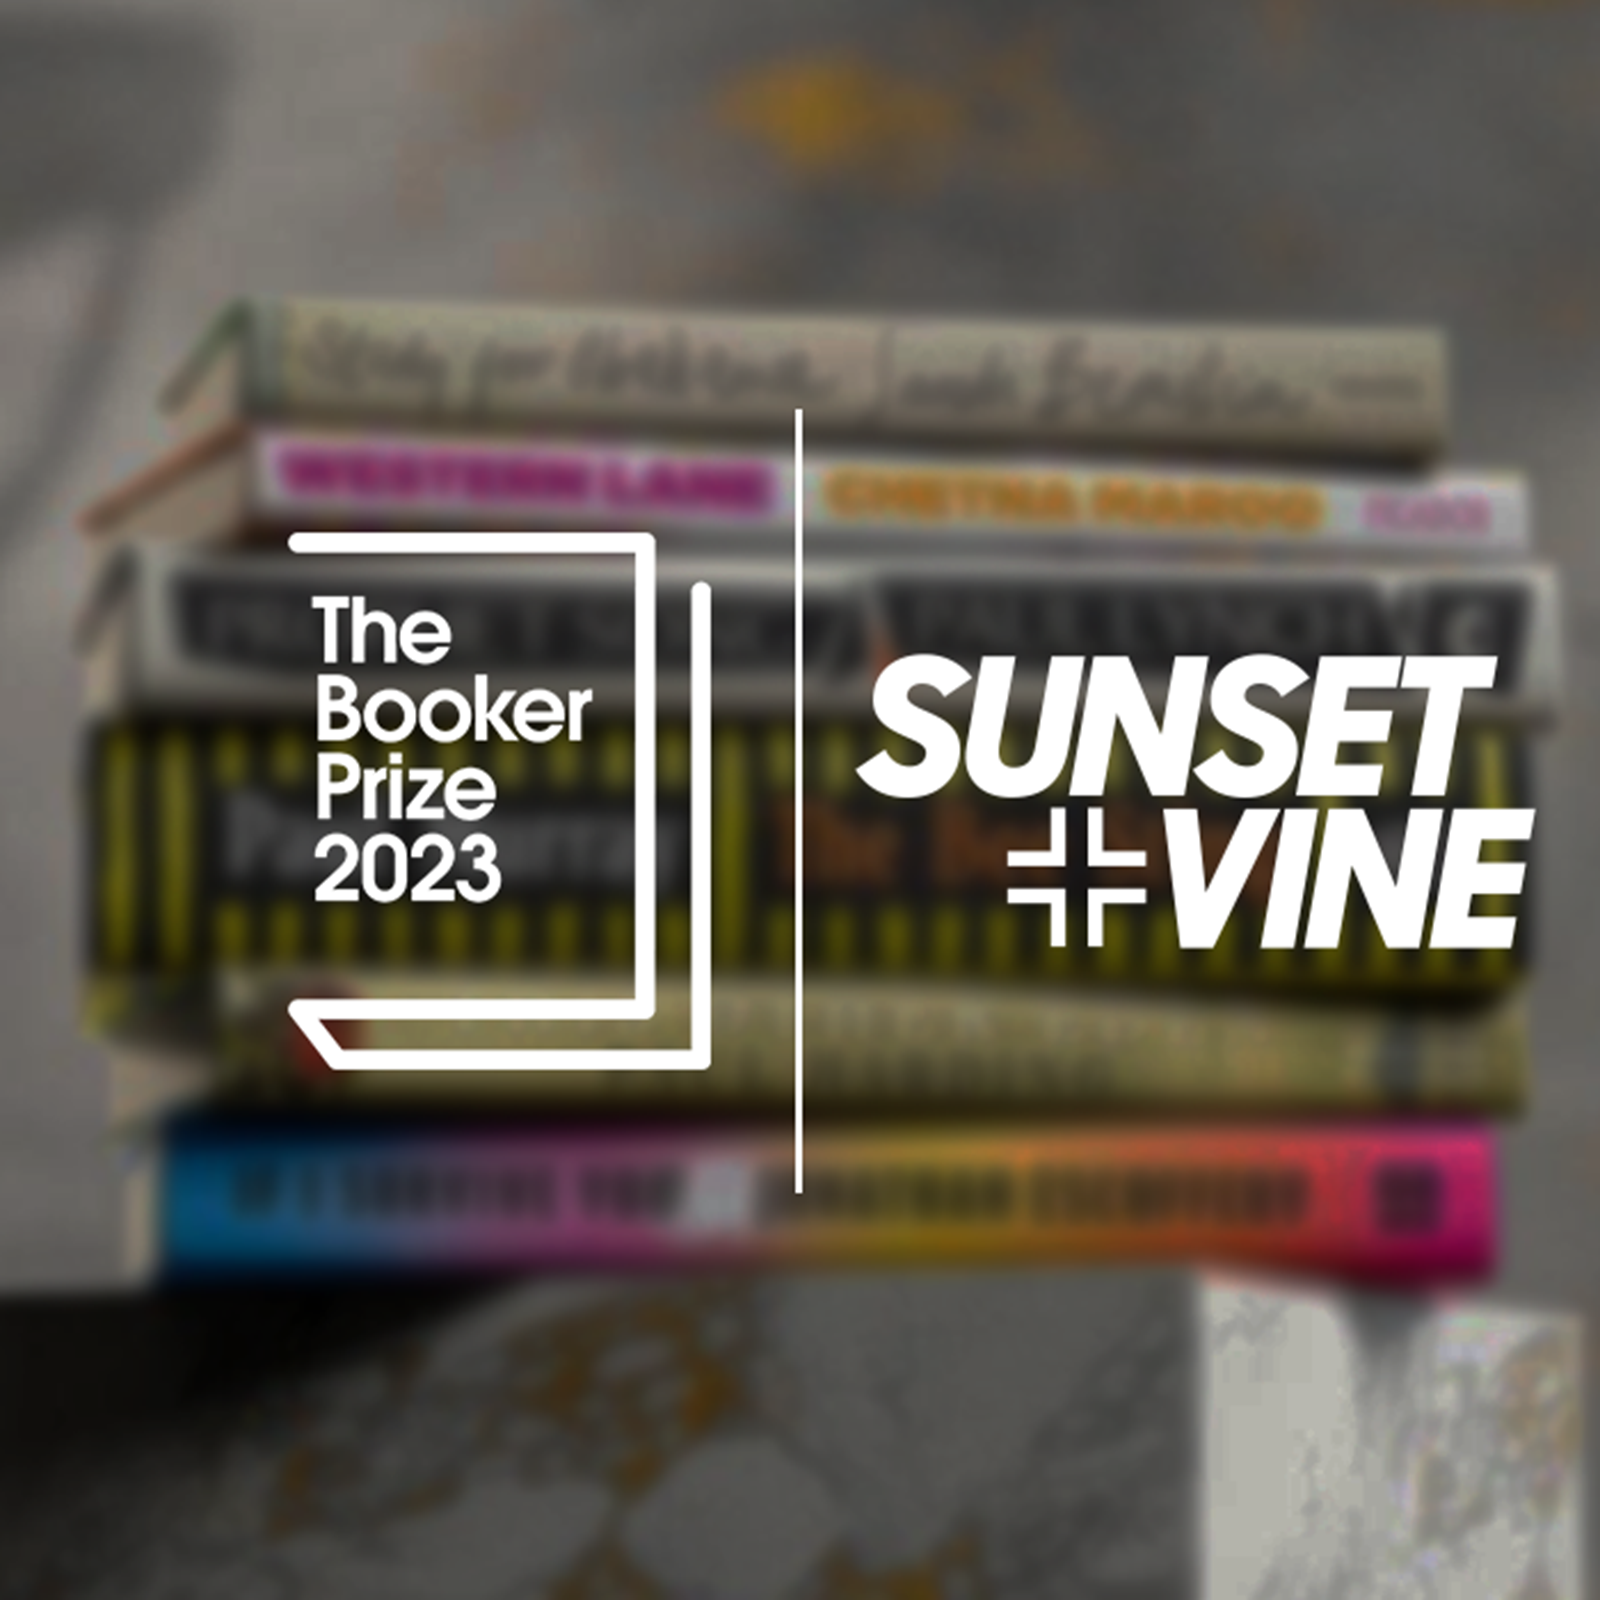 Sunset+Vine secure Booker Prize live stream